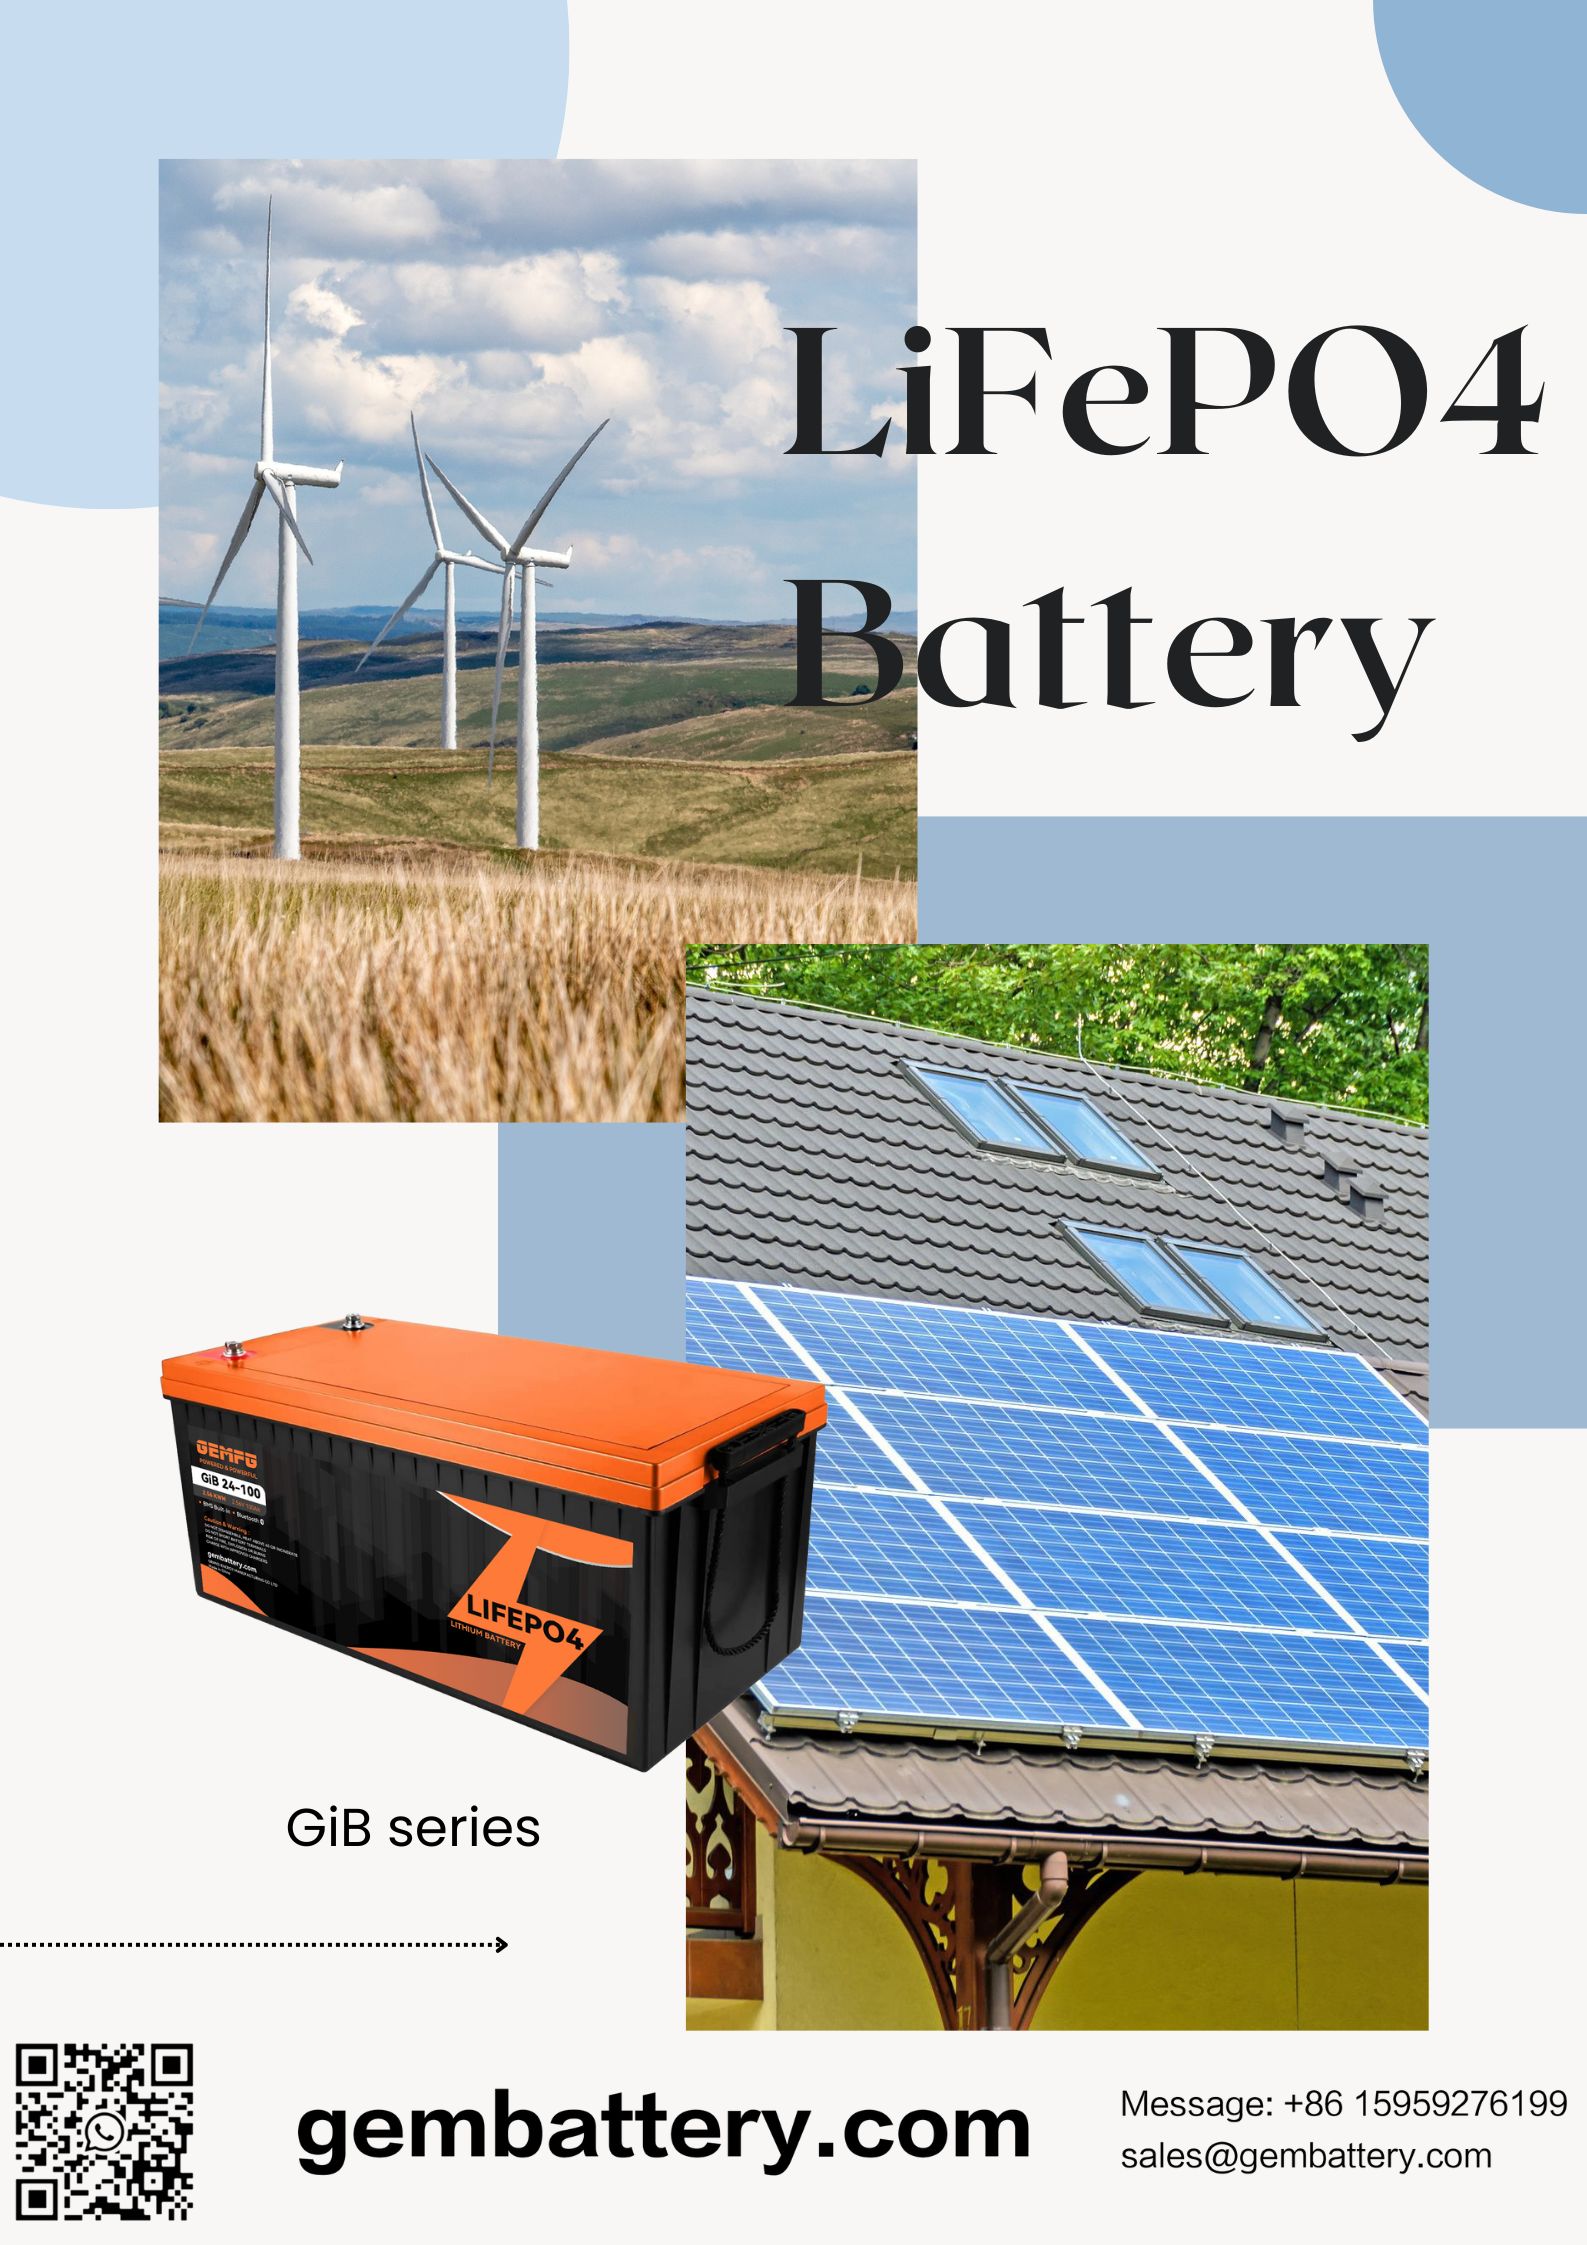 Fabricant de batteries LiFePO4